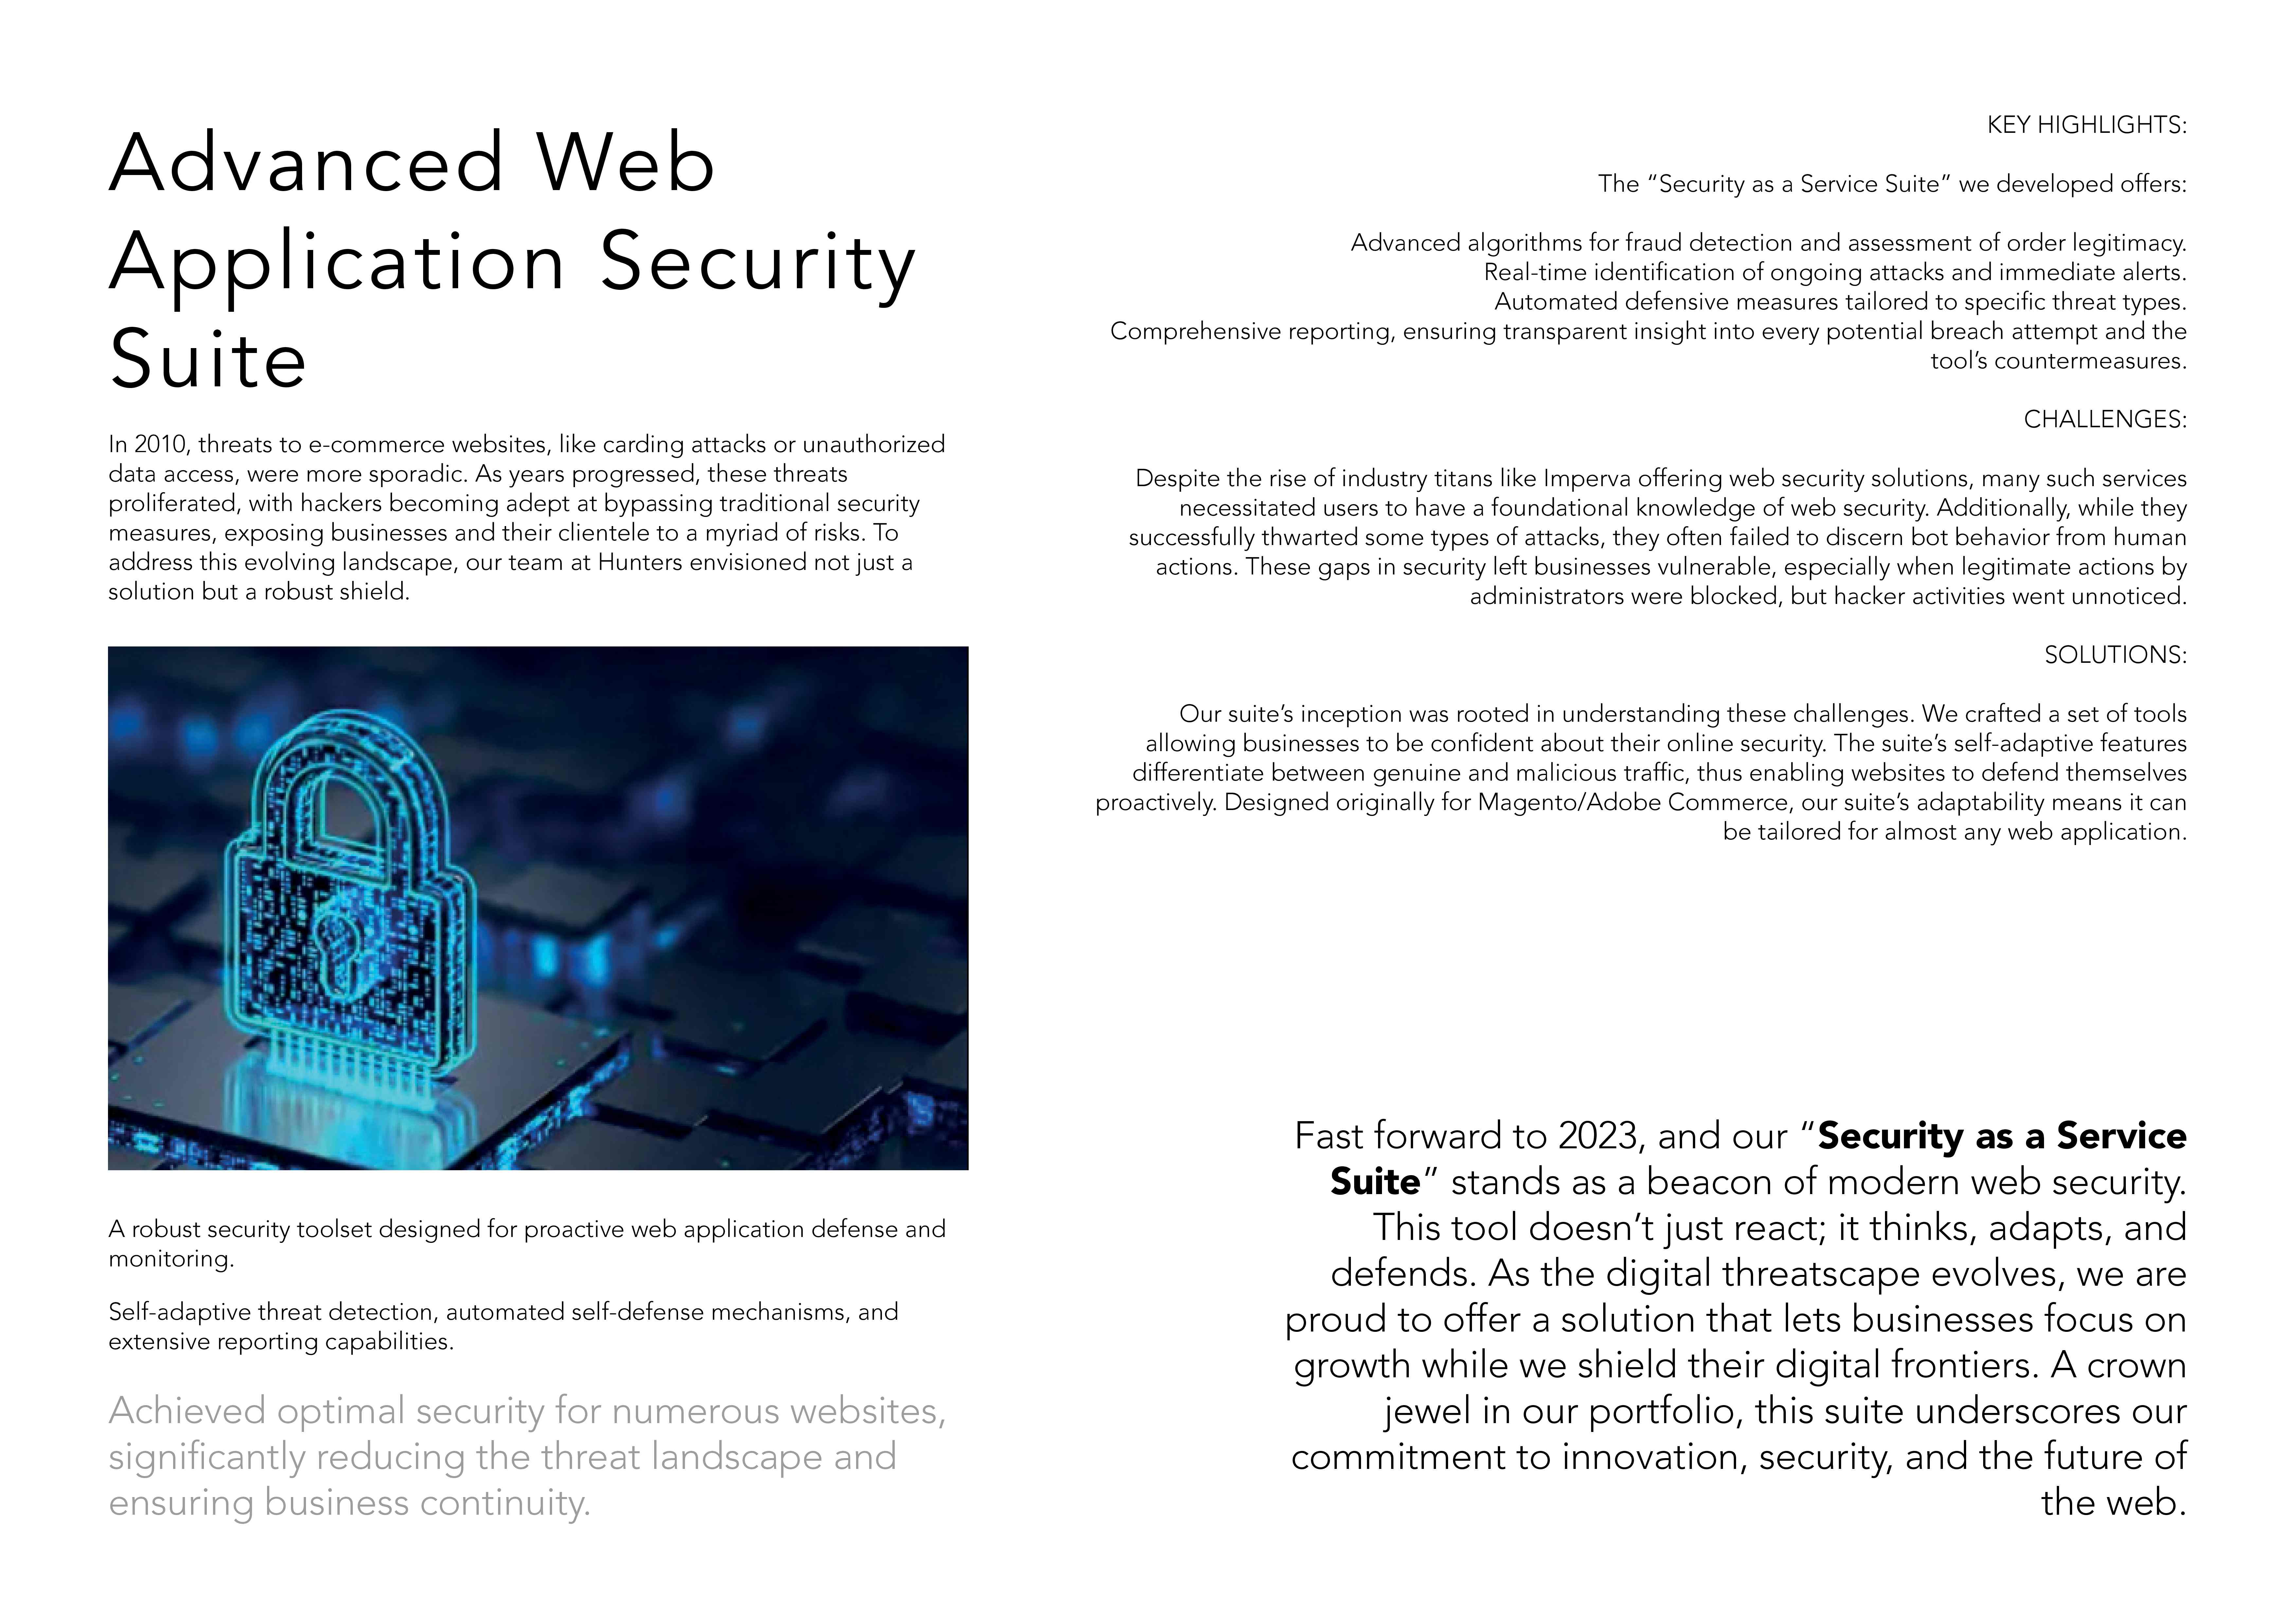 Advanced Web Application Security Suite